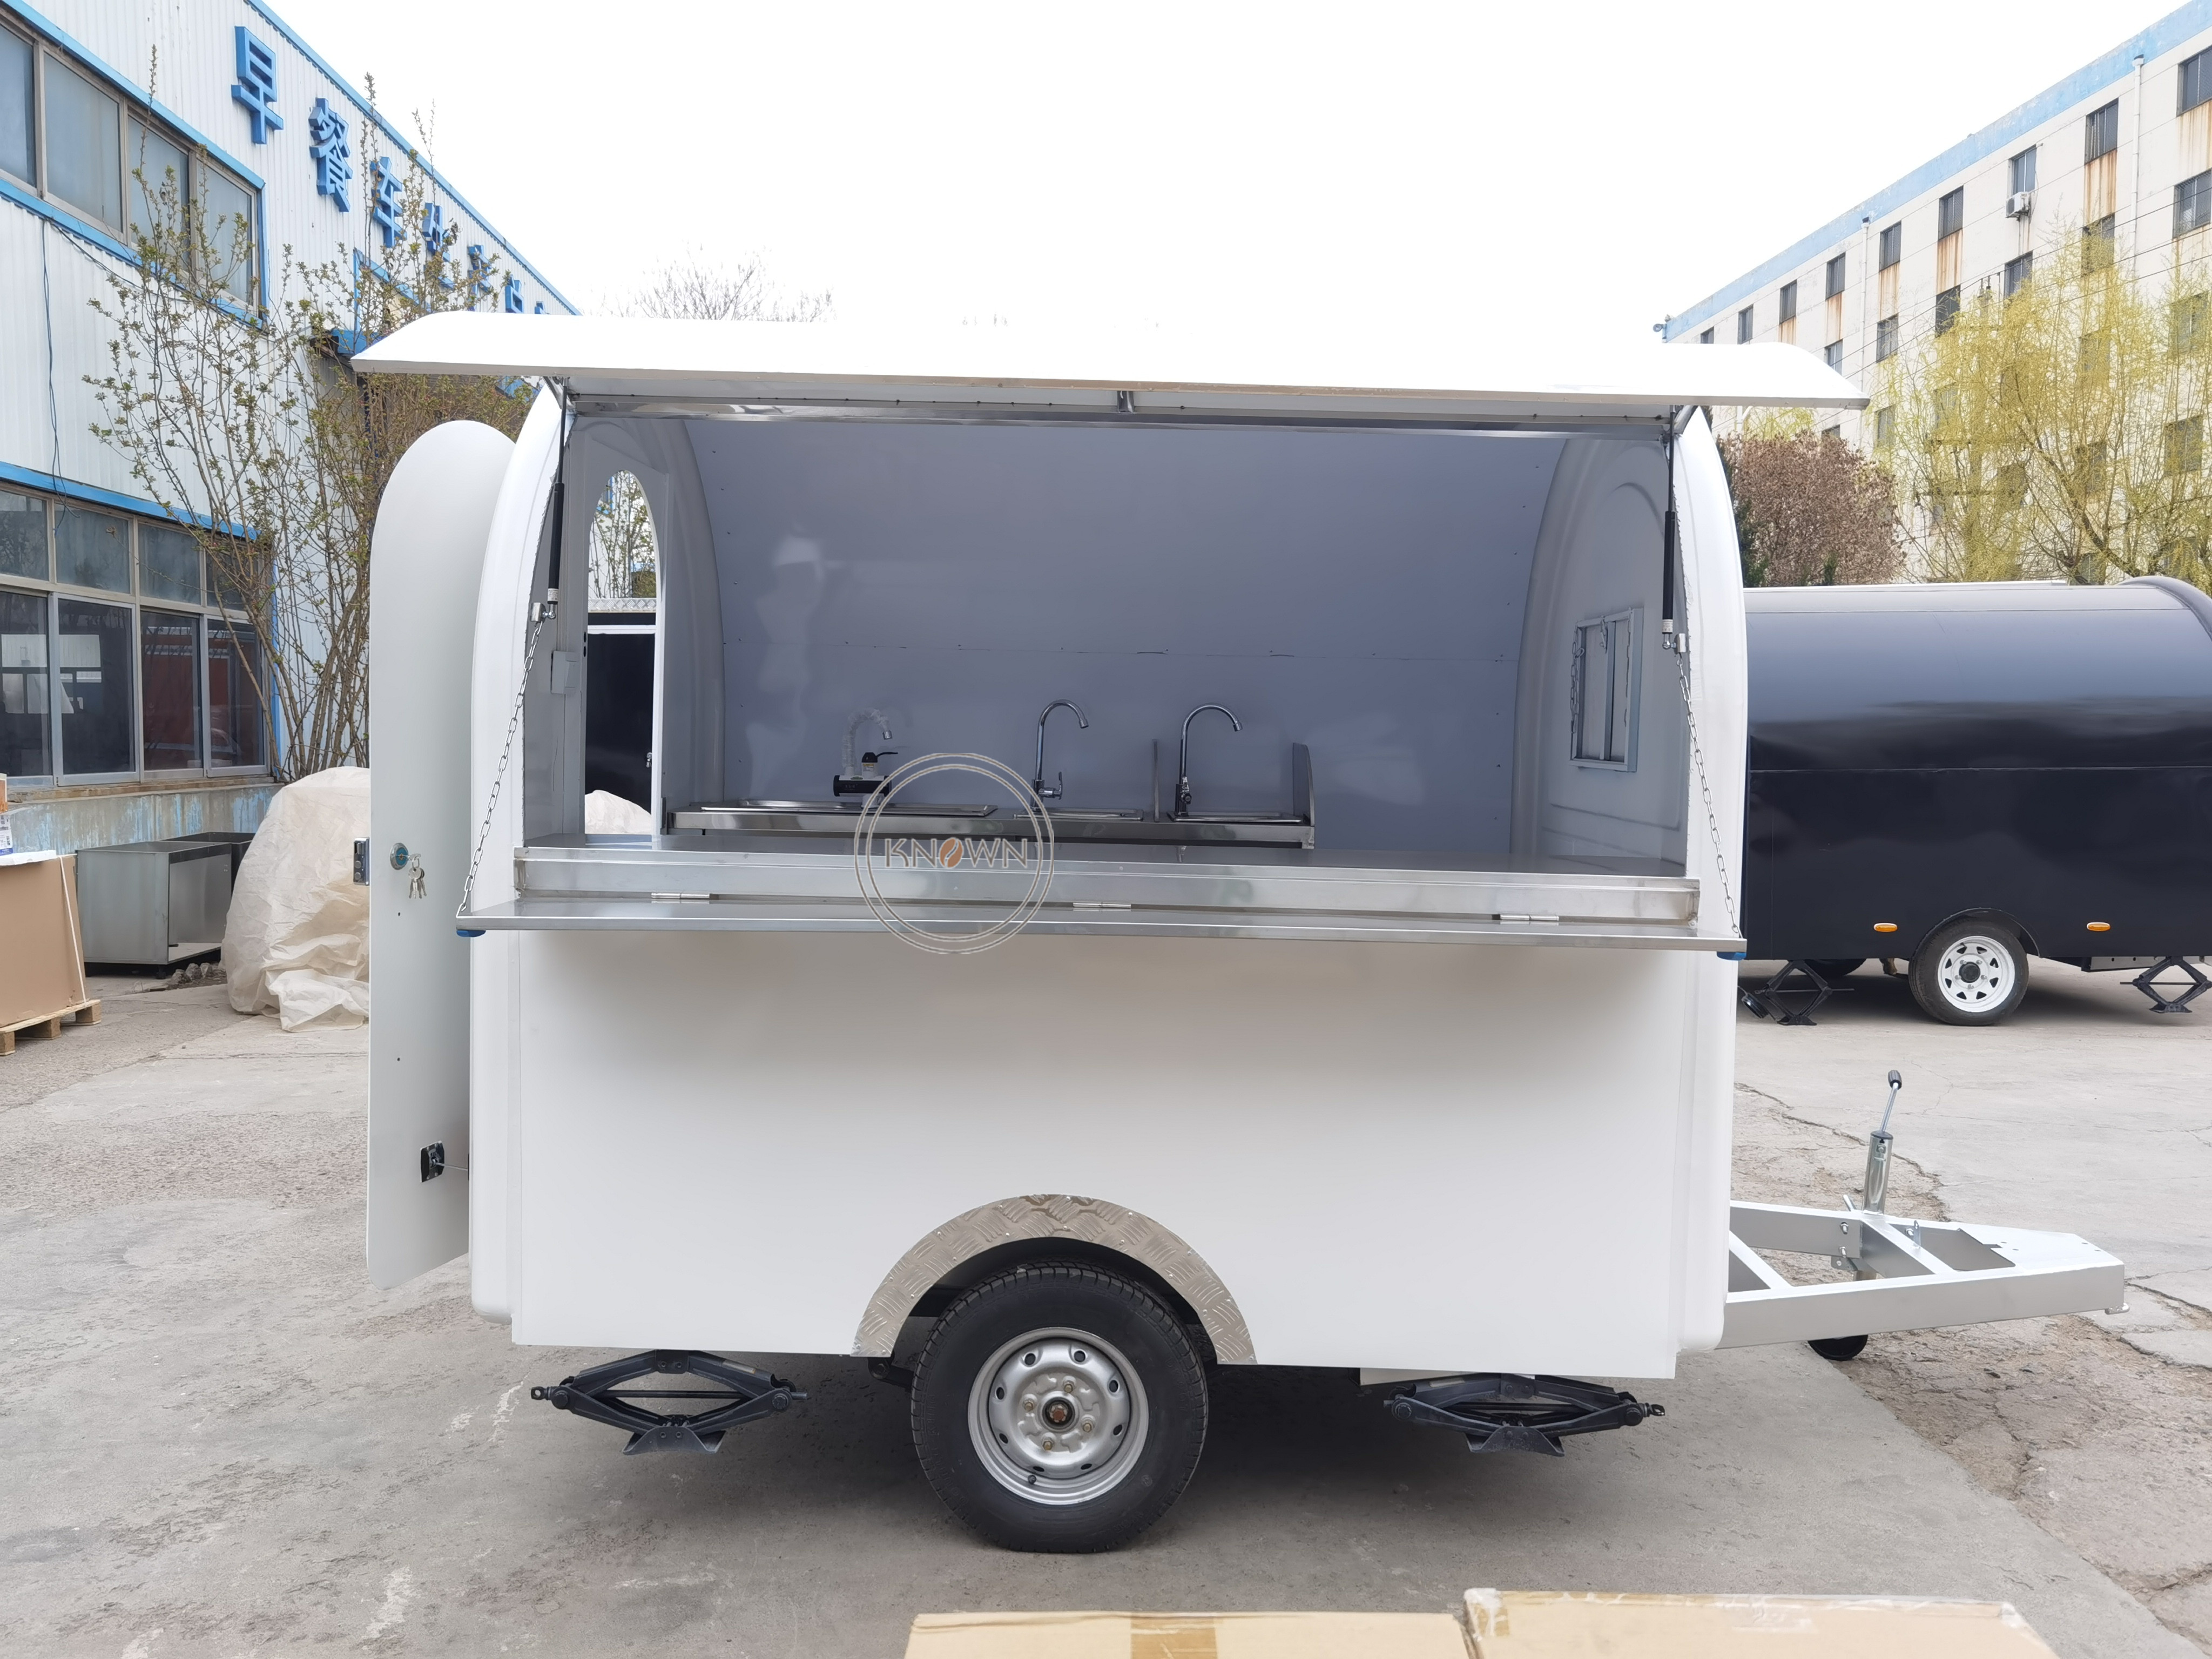 KN-FR-230B Air Conditioner Mobile Hamburger Food Vending Trailer Stainless Steel Food Truck Kiosk